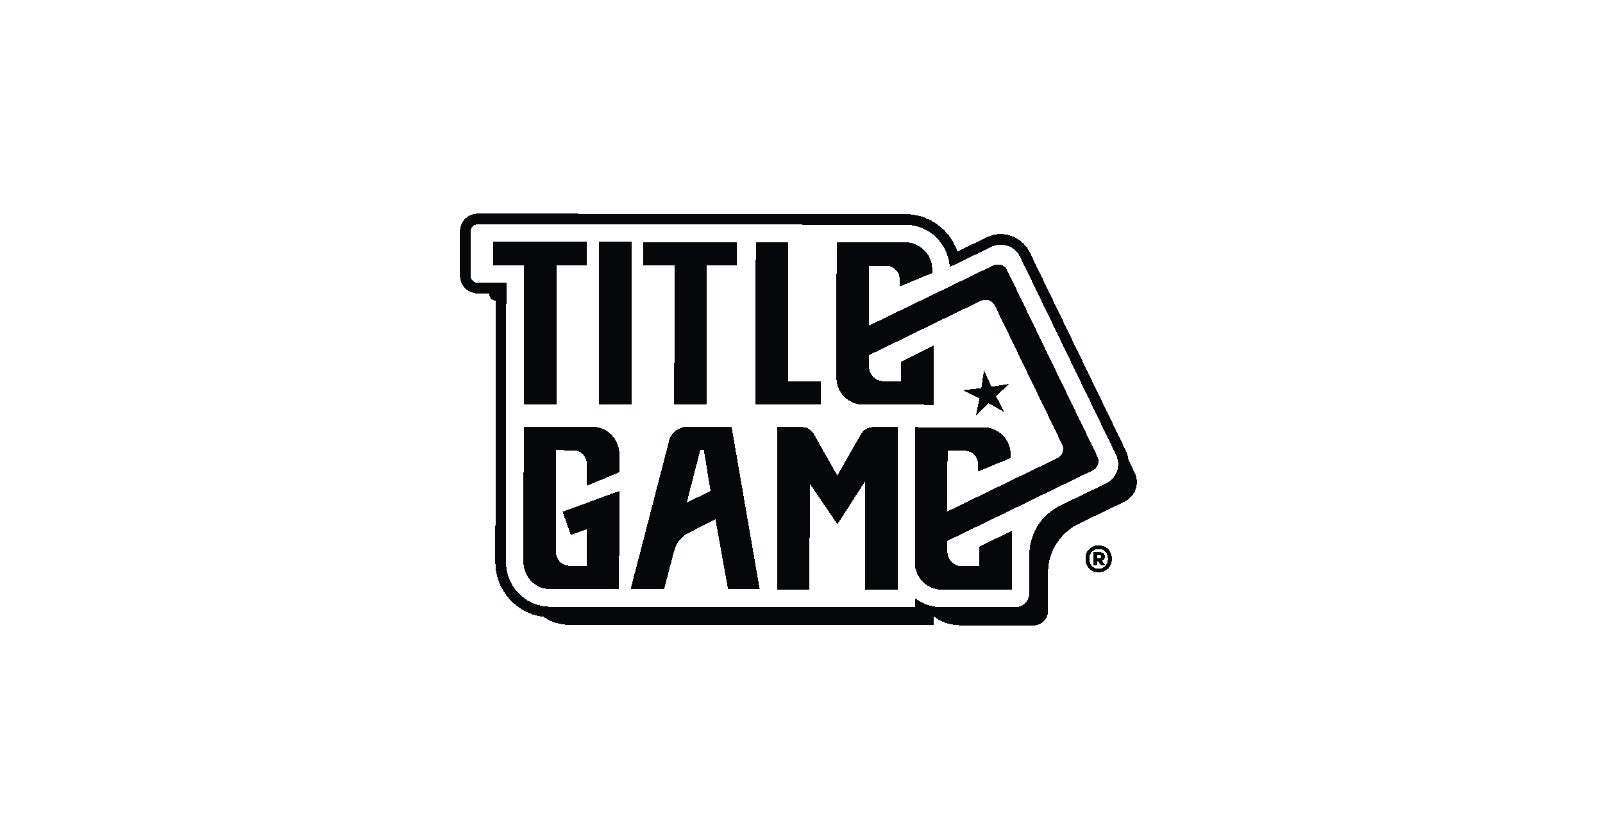 Title Game Frames